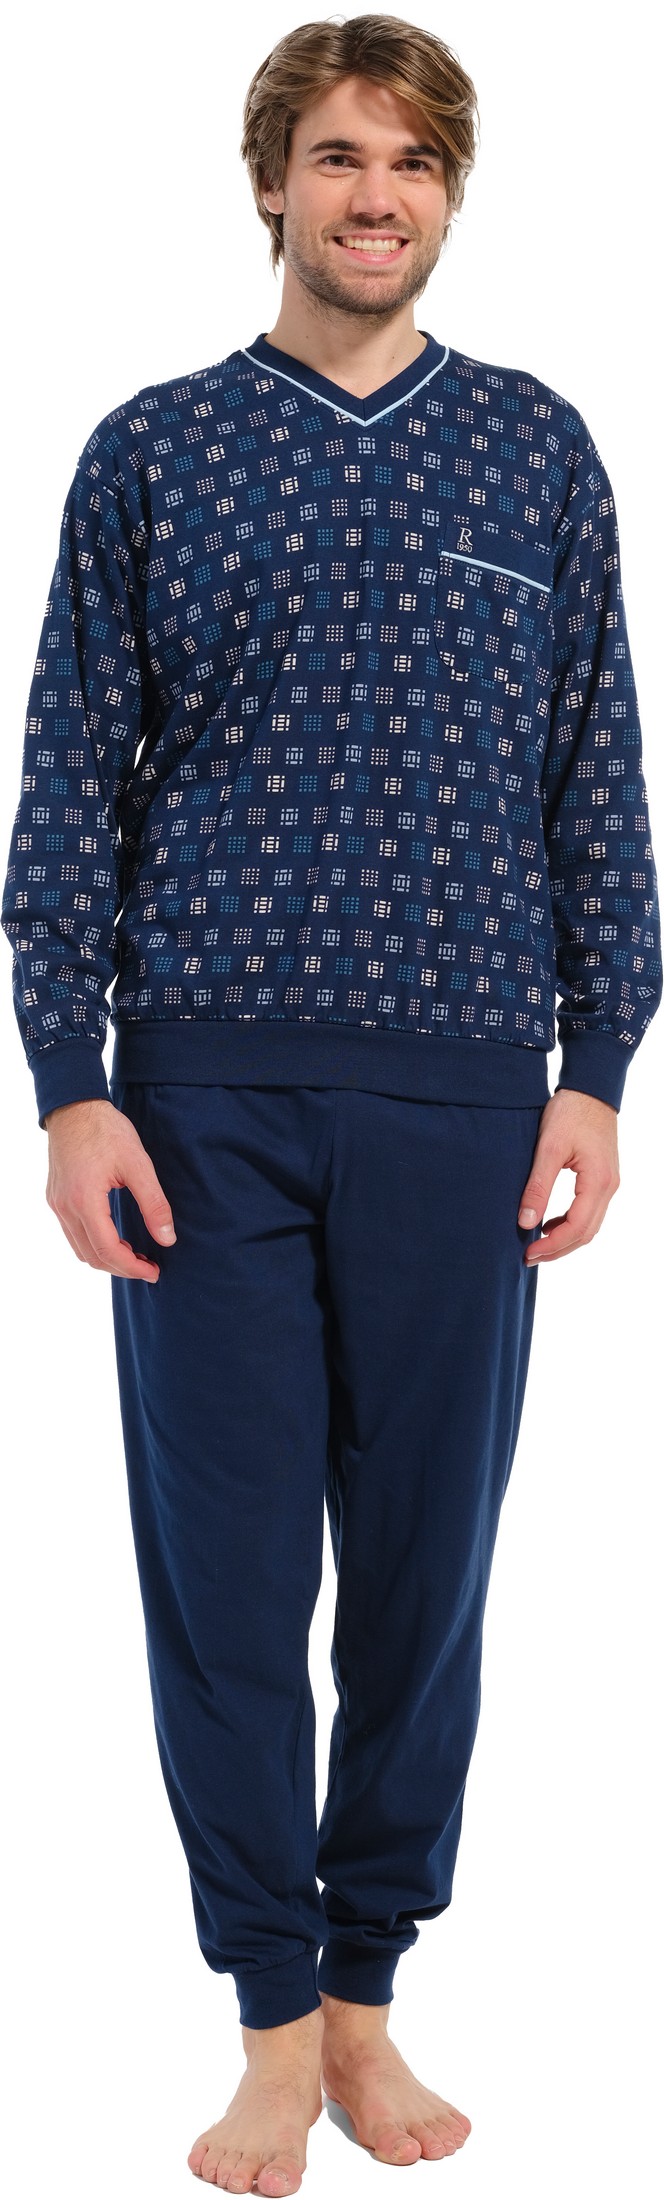 Robson tricot heren pyjama 27232-716-2 - Blauw - XL/54